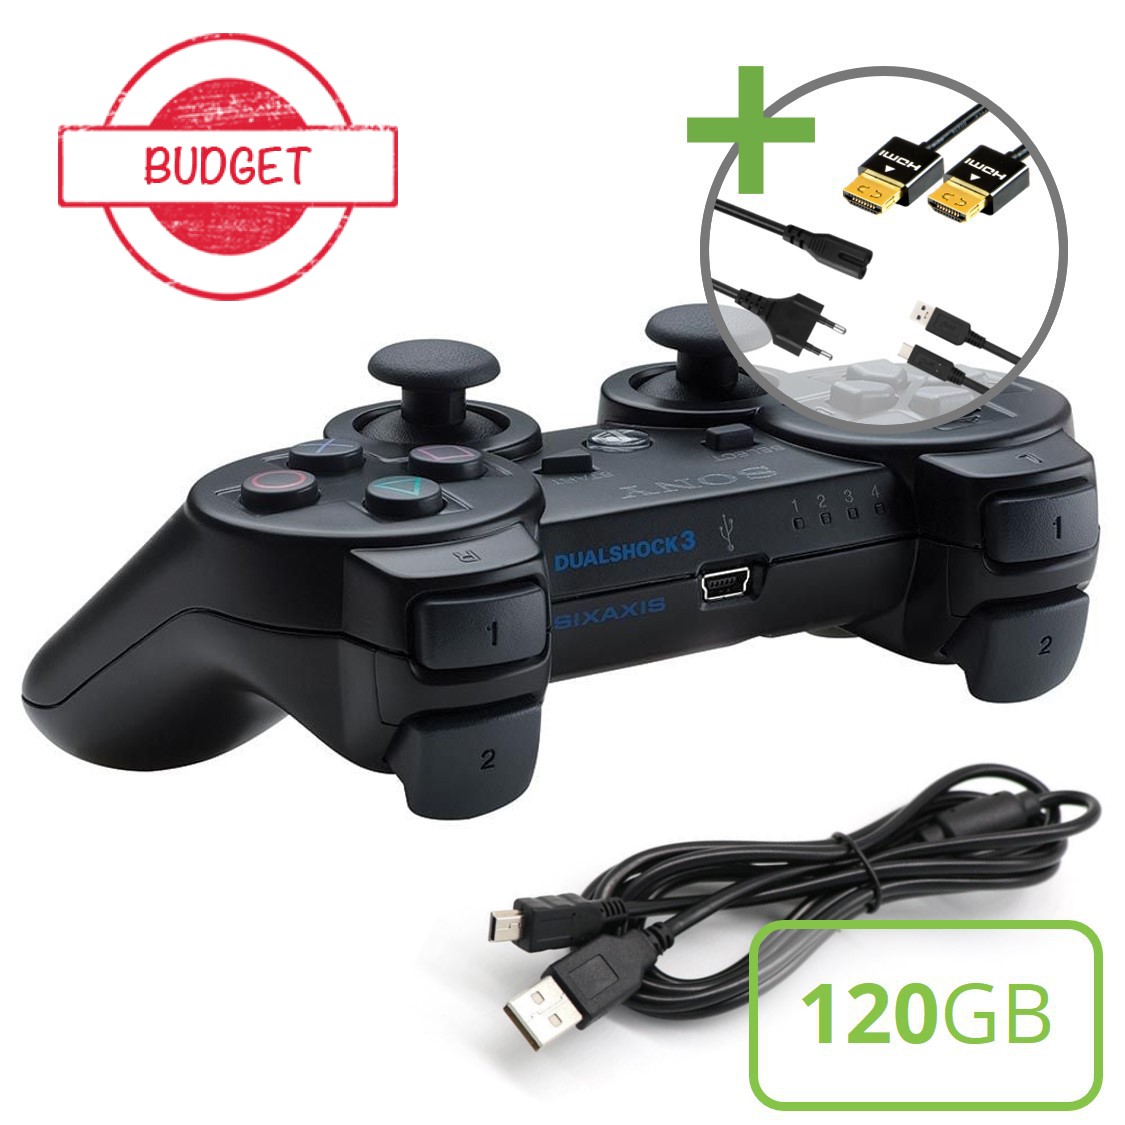 Sony PlayStation 3 Slim (120GB) Starter Pack - DualShock Edition - Budget - Playstation 3 Hardware - 4